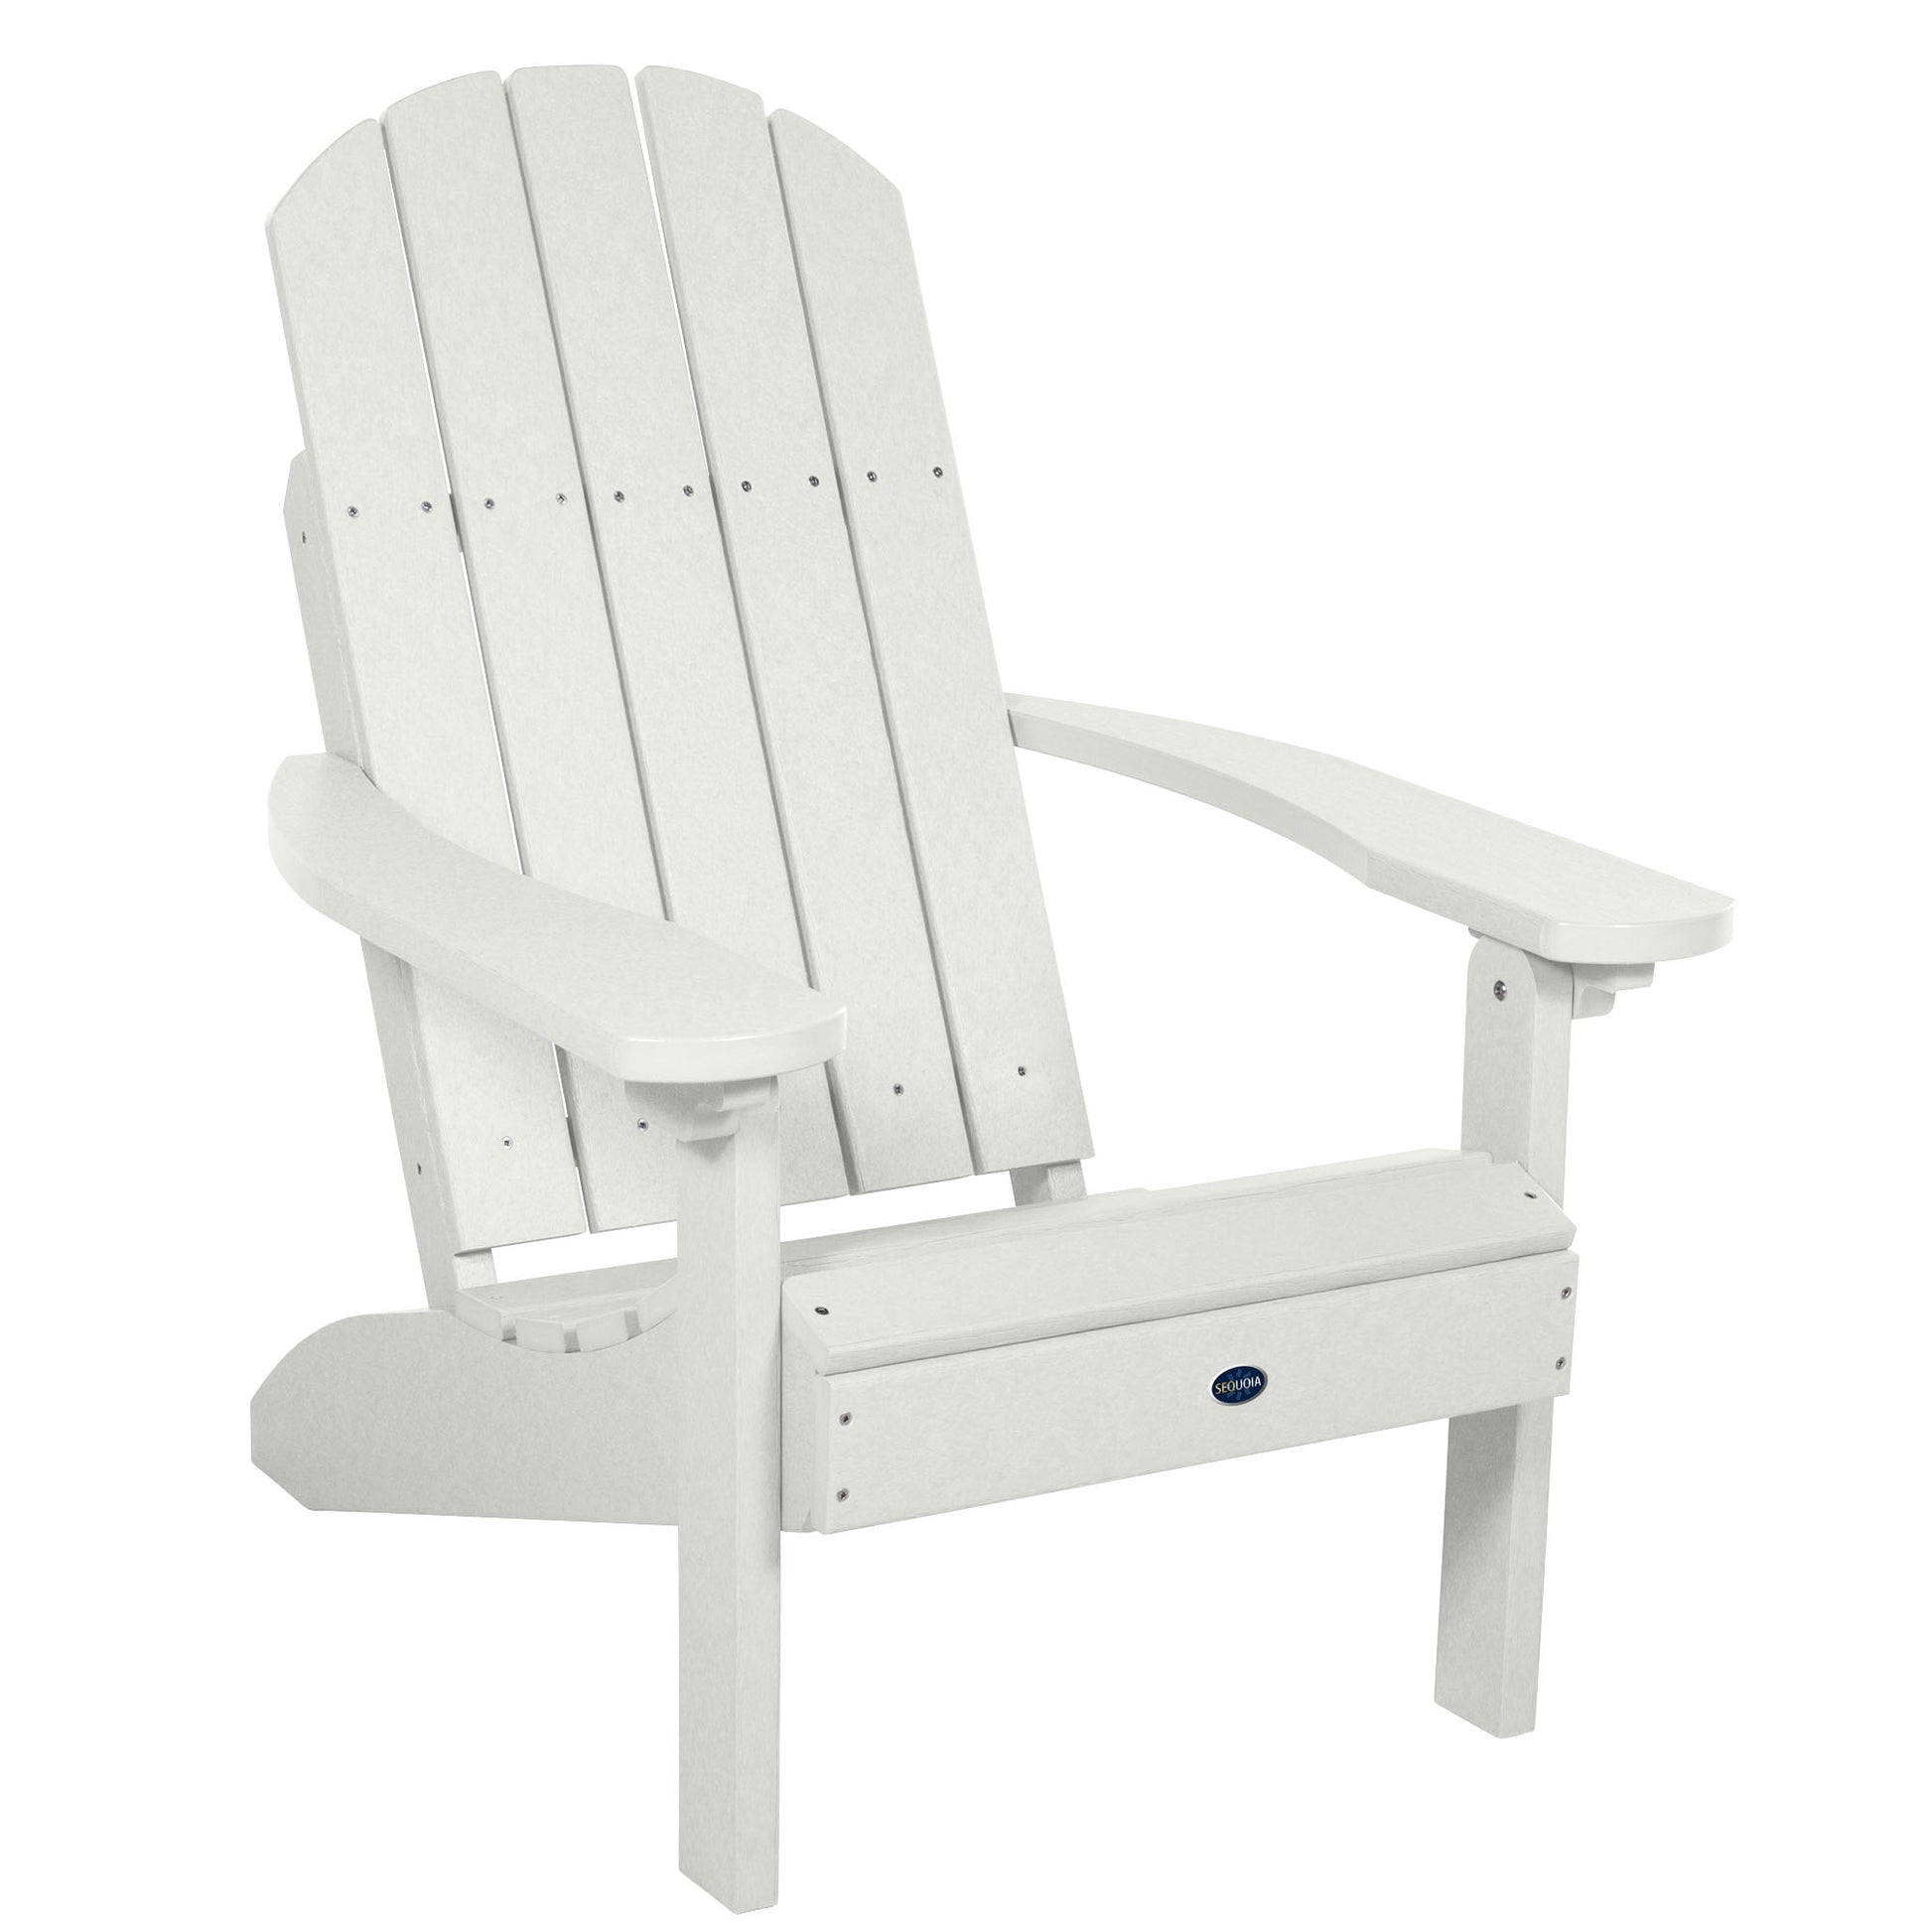 Sunrise Coast classic Adirondack chair in Coconut White